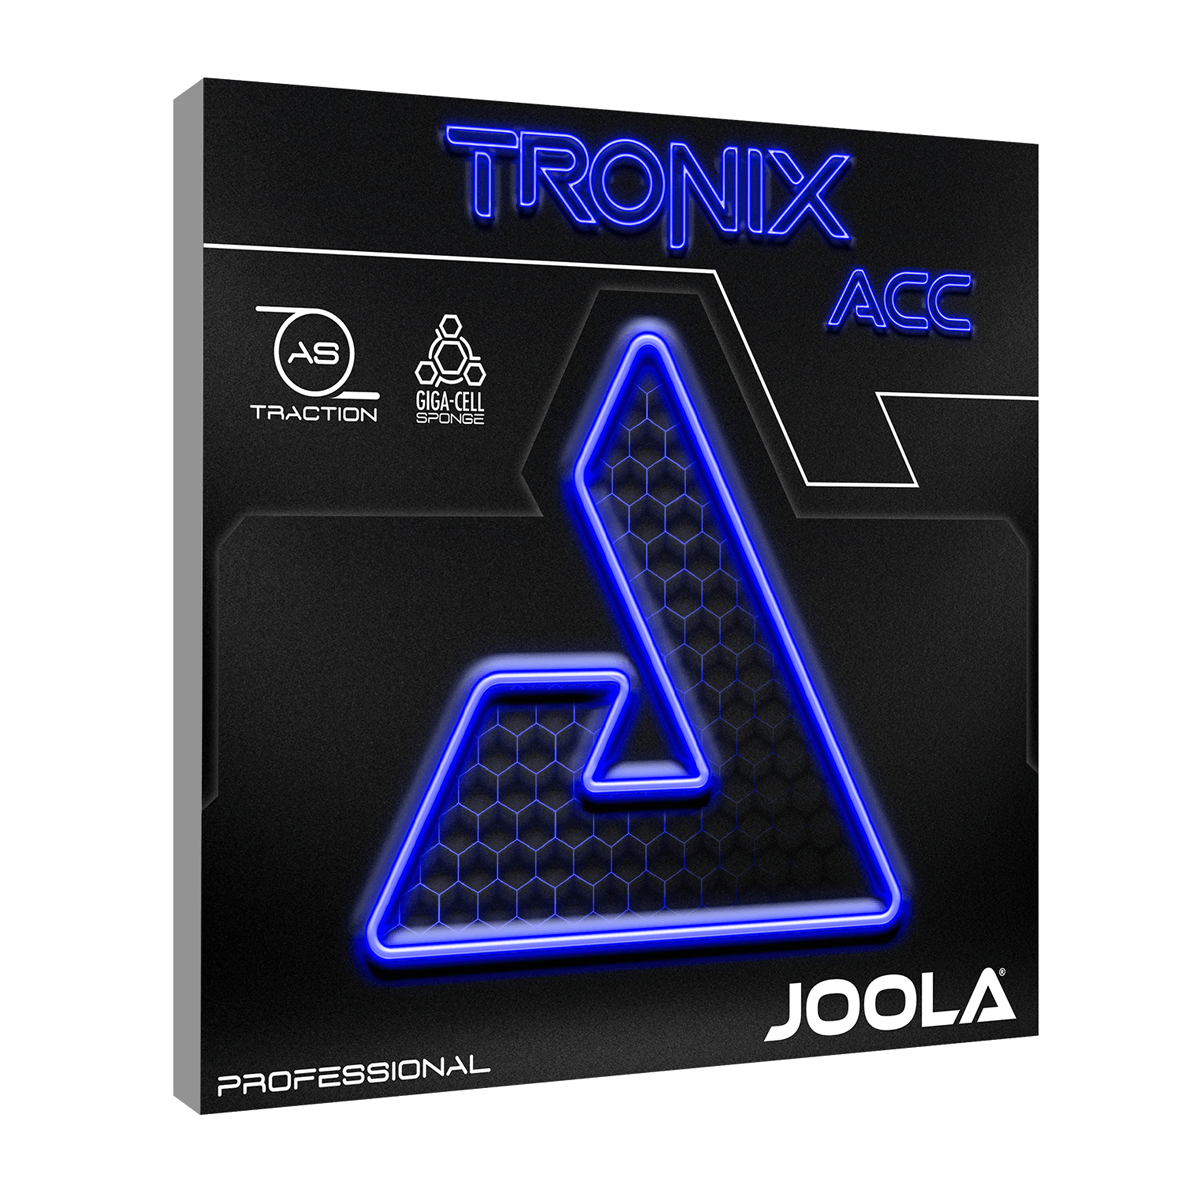 Joola Tronix Acc Table Tennis Rubber Joola Usa